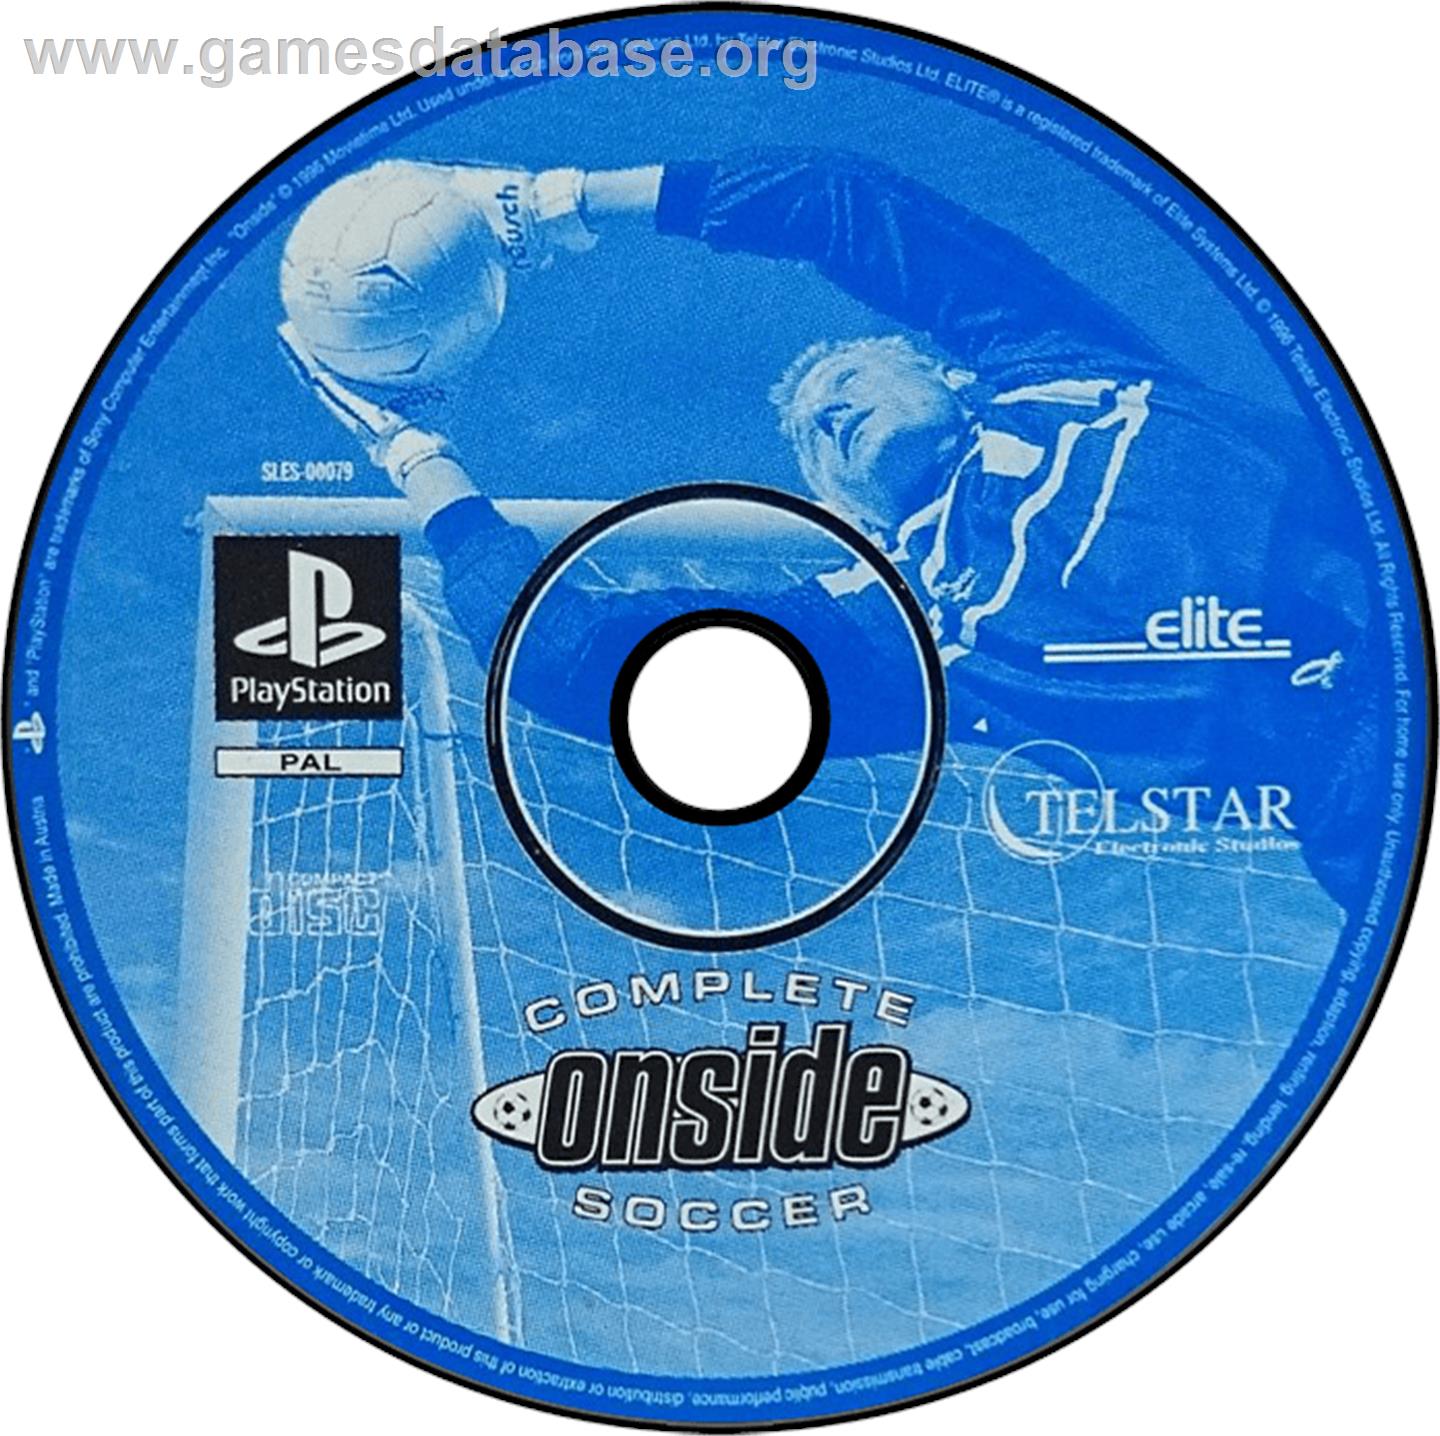 ONSIDE Complete Soccer - Sony Playstation - Artwork - Disc